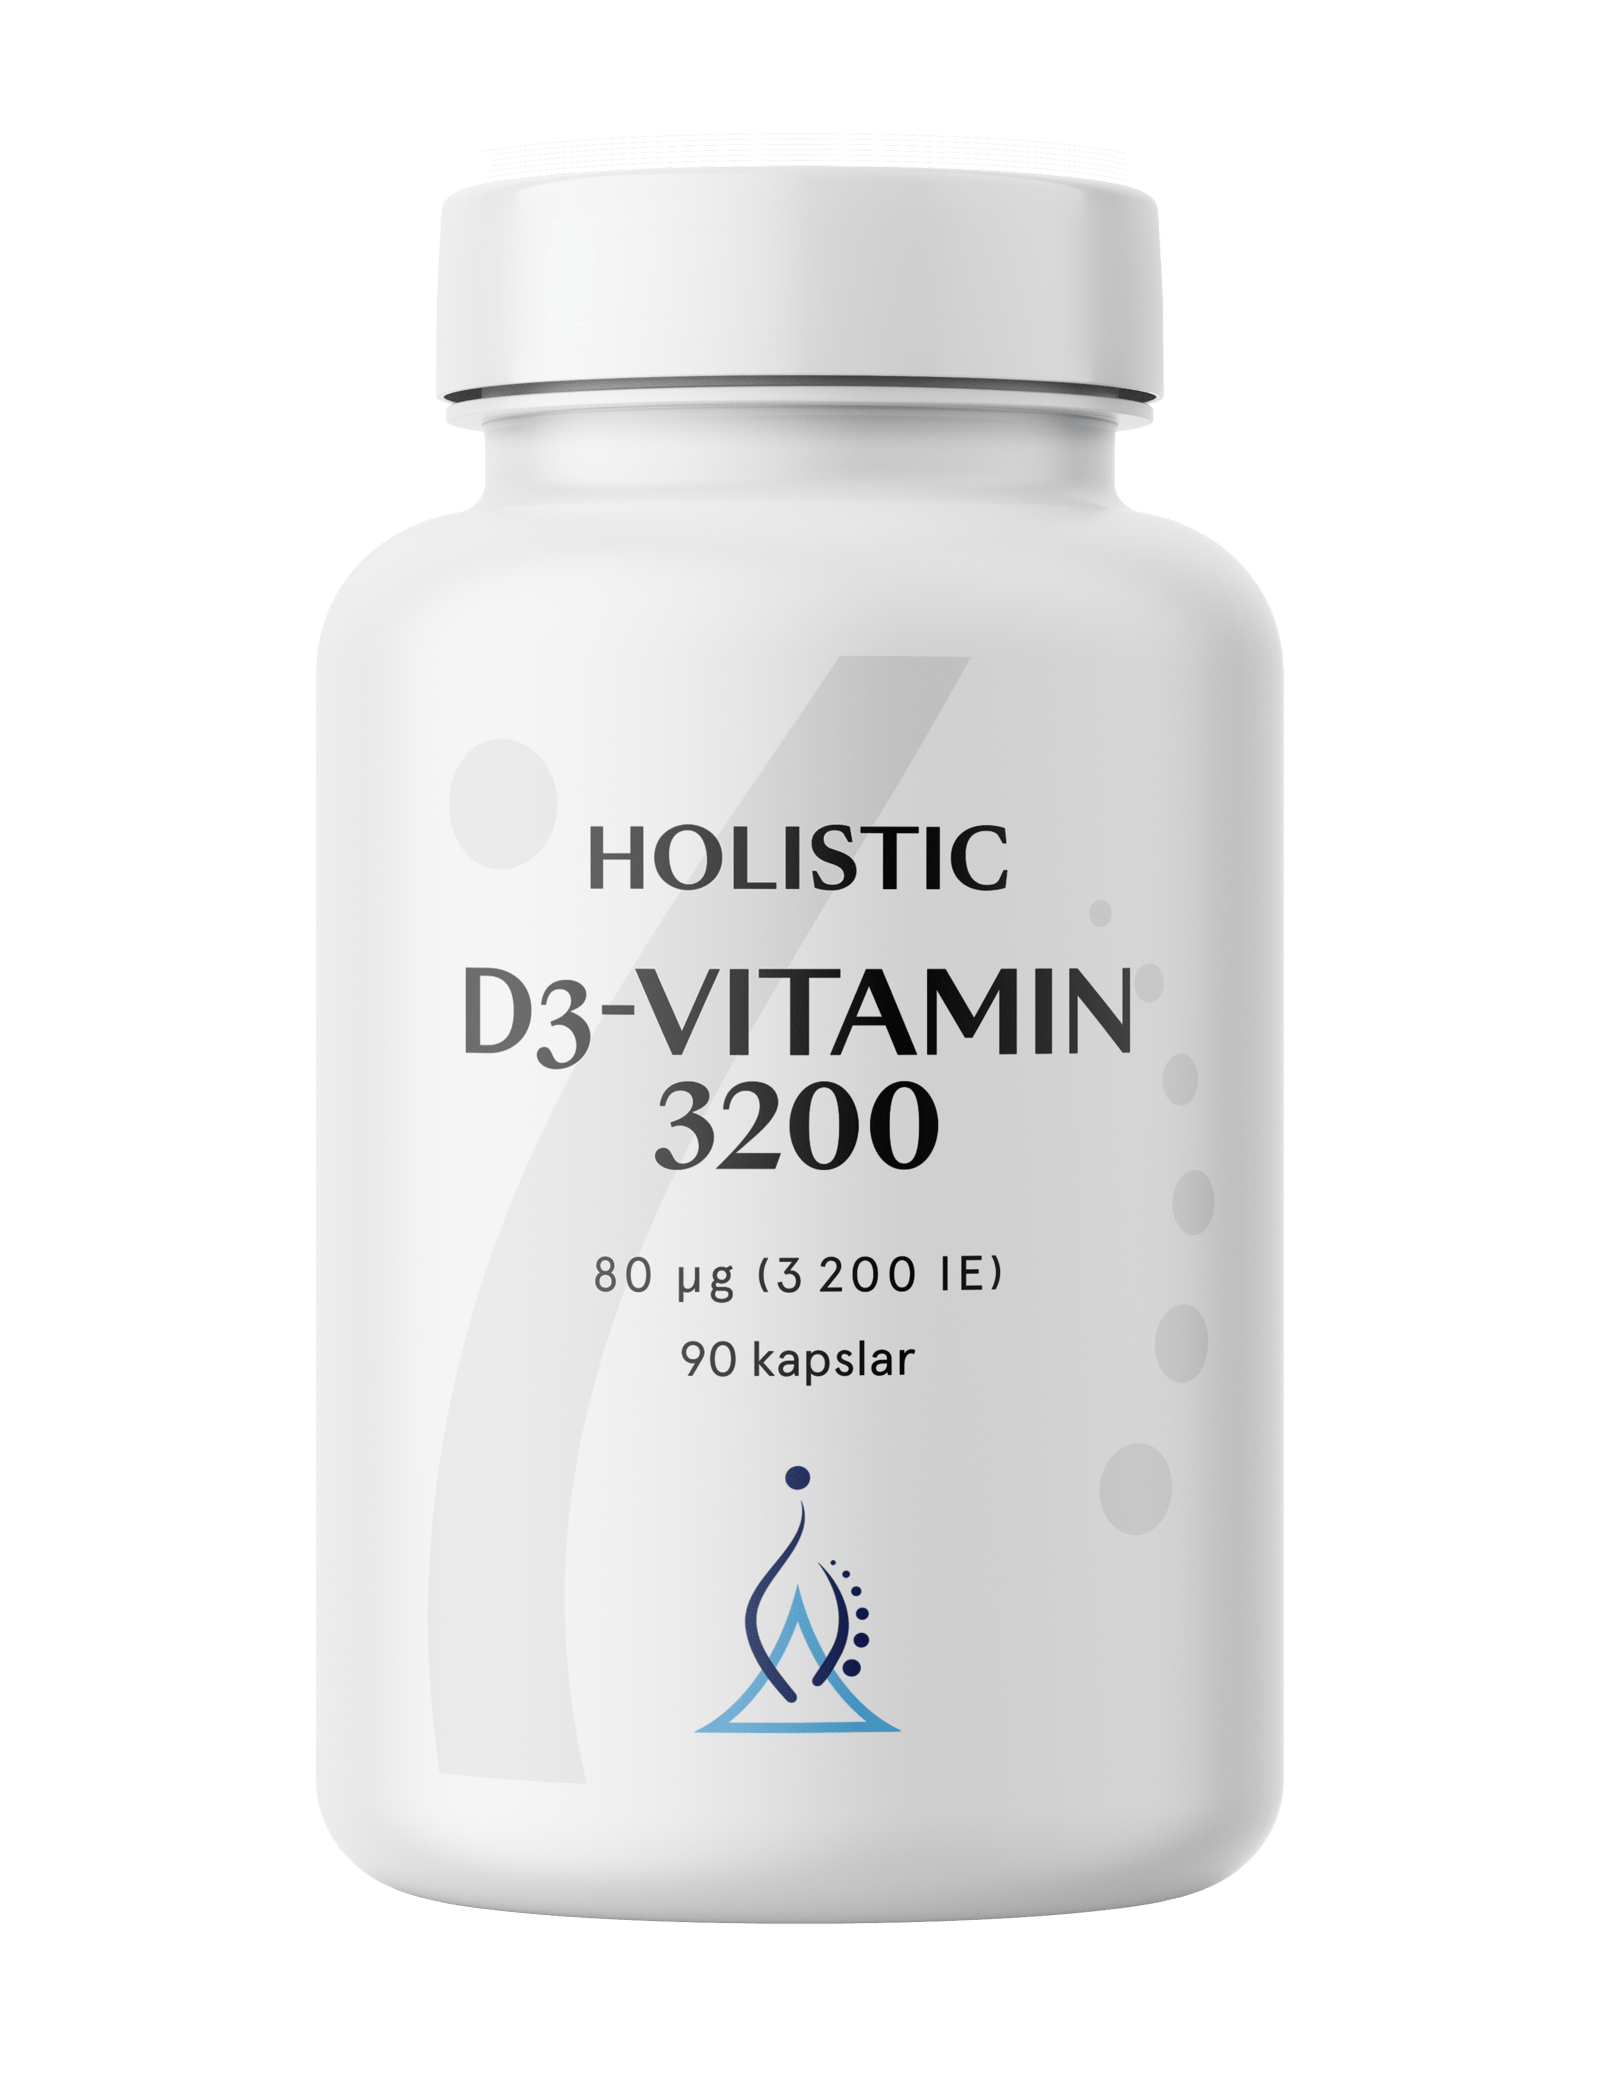 Holistic D3-vitamin 3200IE (80 µg) 90 vegetabiliska kapslar